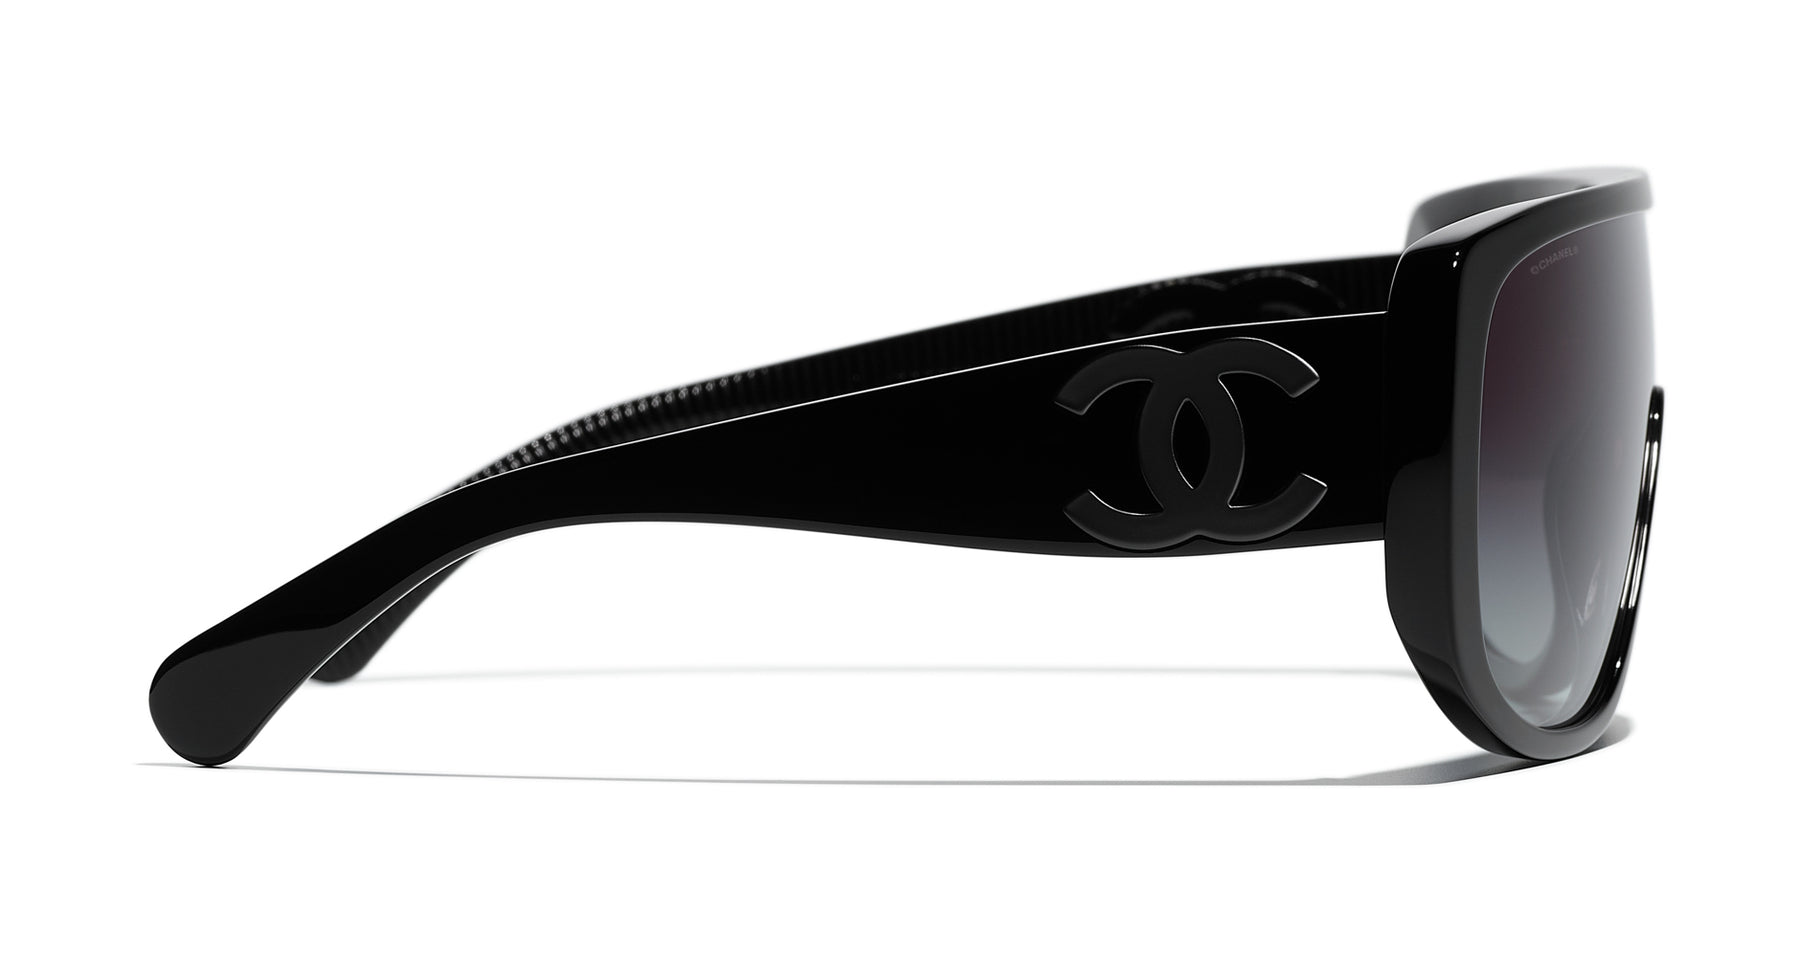 Chanel 5495 Sunglasses Dark Tortoise/Brown Shield Women